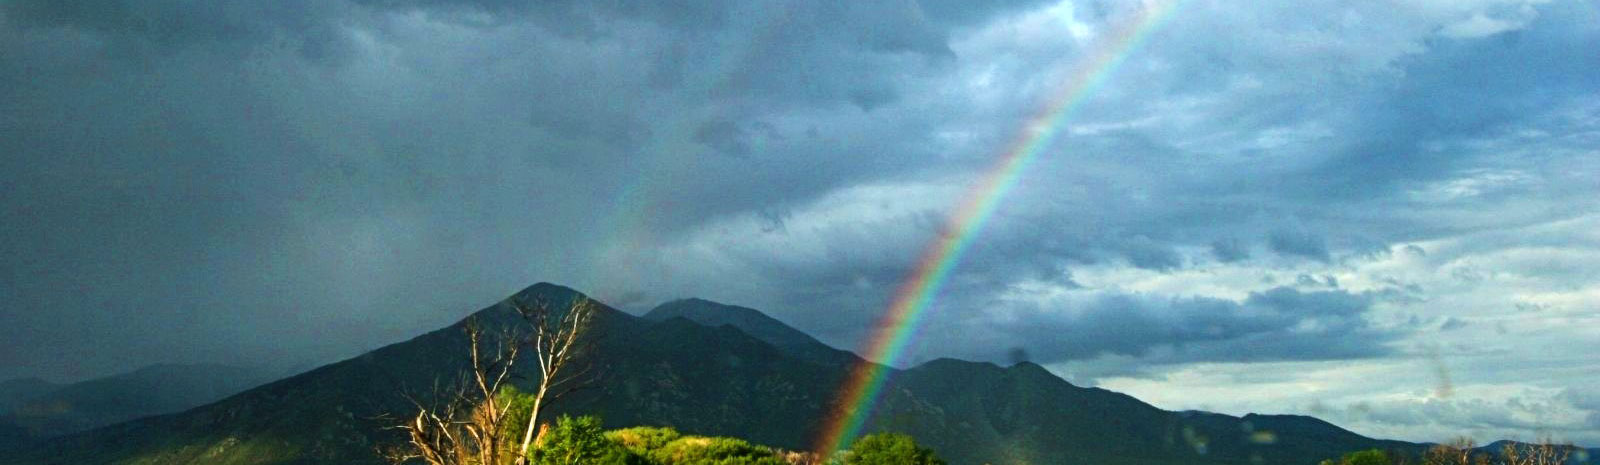 Taos Mountain with Double Rainbow